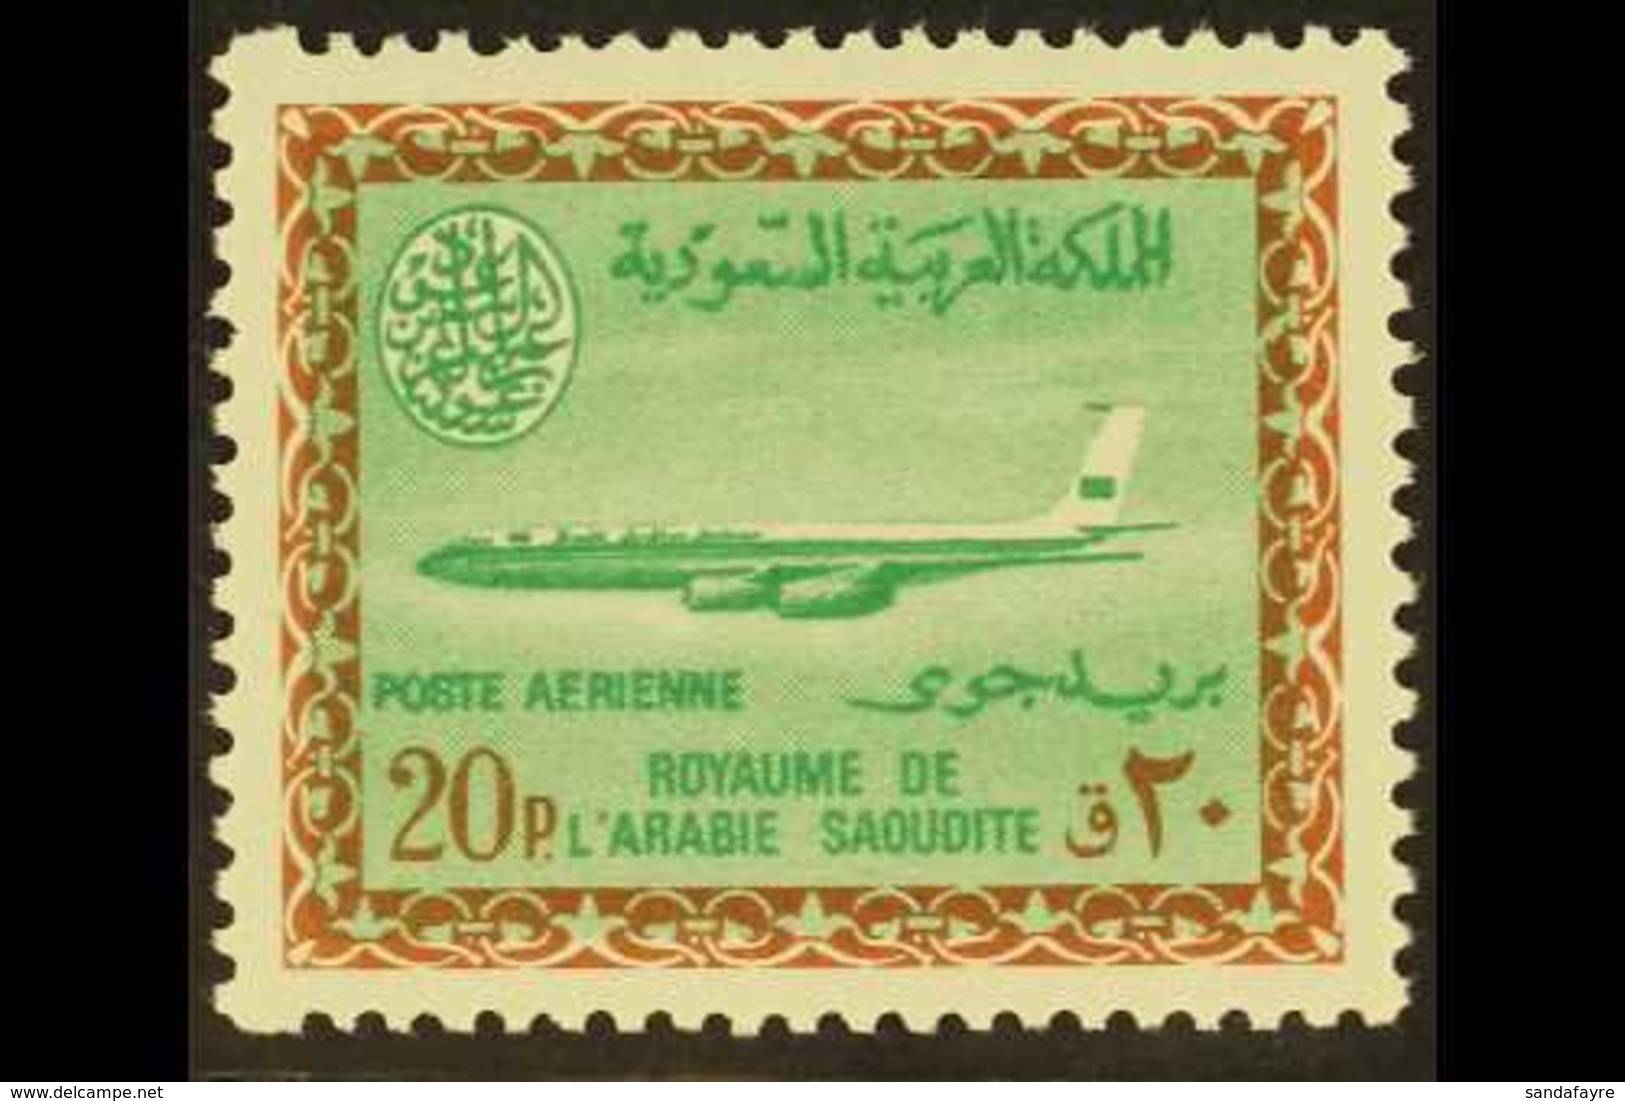 1965-72  20p Emerald & Orange Brown (Boeing 720B) Air, SG 604, Mi 260, Never Hinged Mint For More Images, Please Visit H - Saudi-Arabien